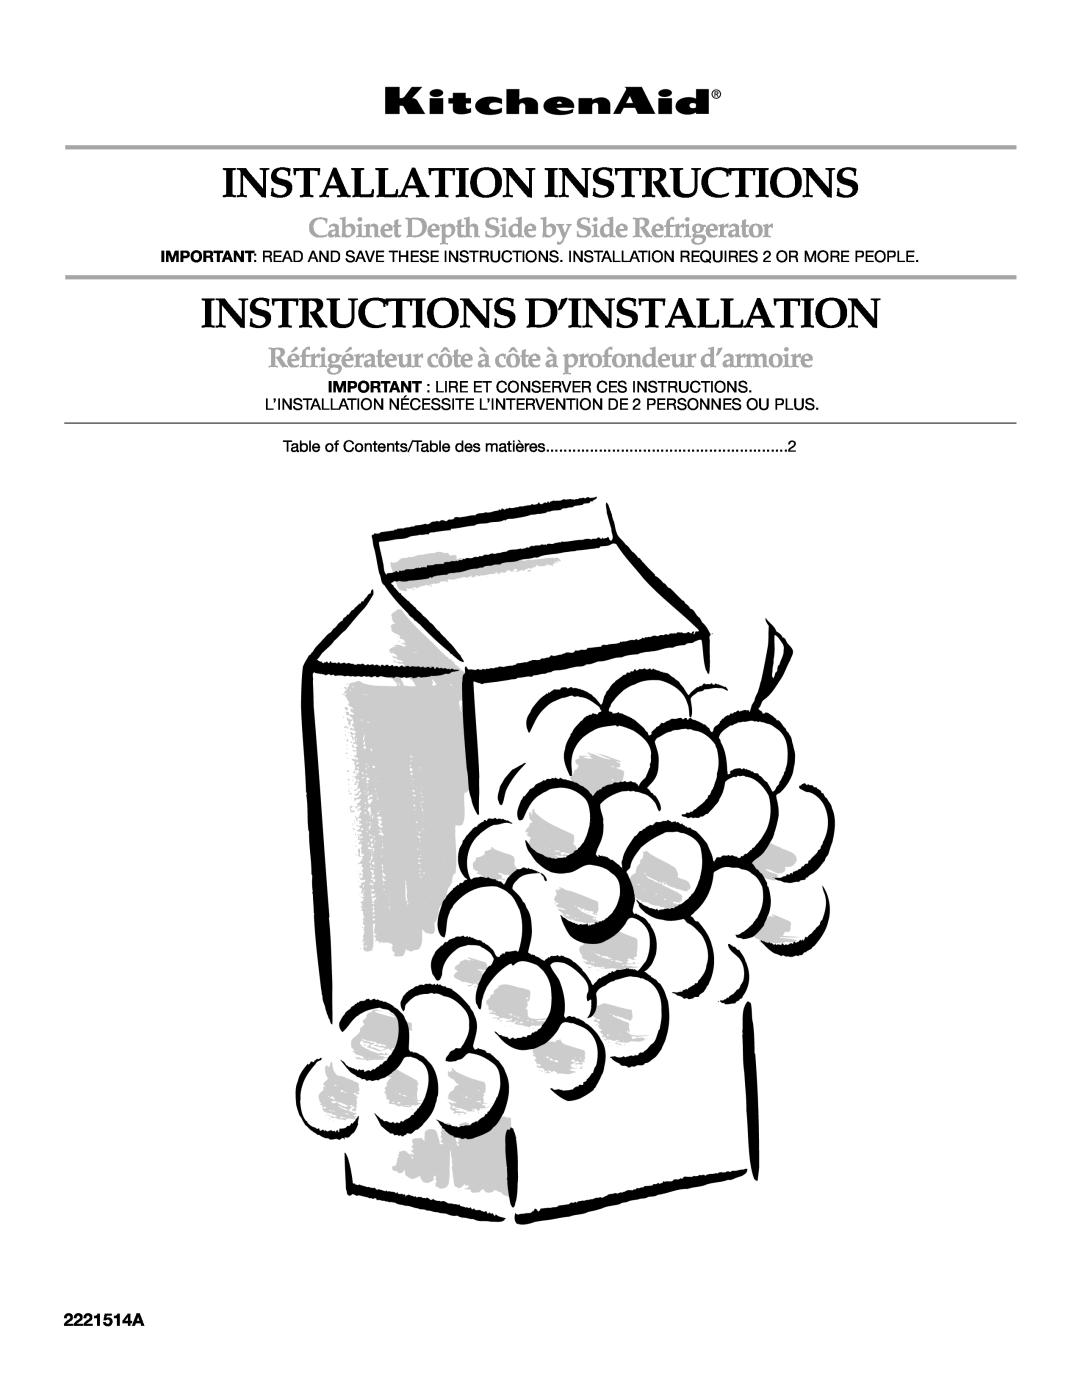 KitchenAid 2221514A installation instructions Installation Instructions, Instructions D’Installation 